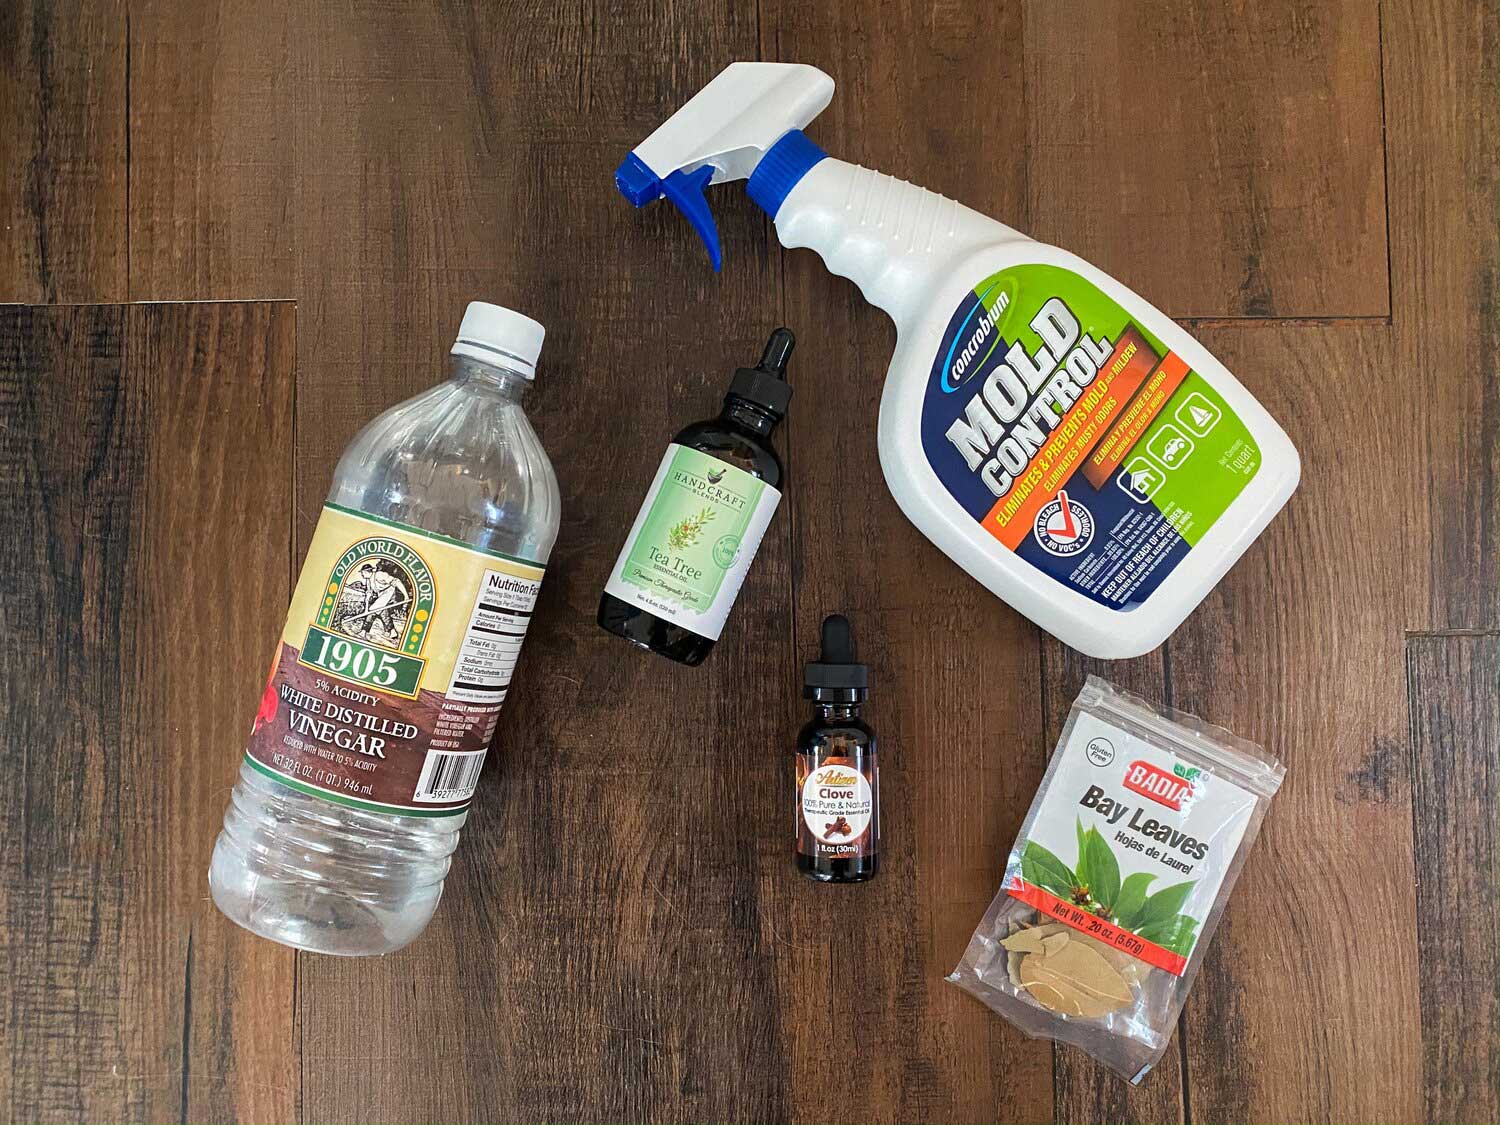 "Vinegar, mold control spray, bay leaves, and essential oils